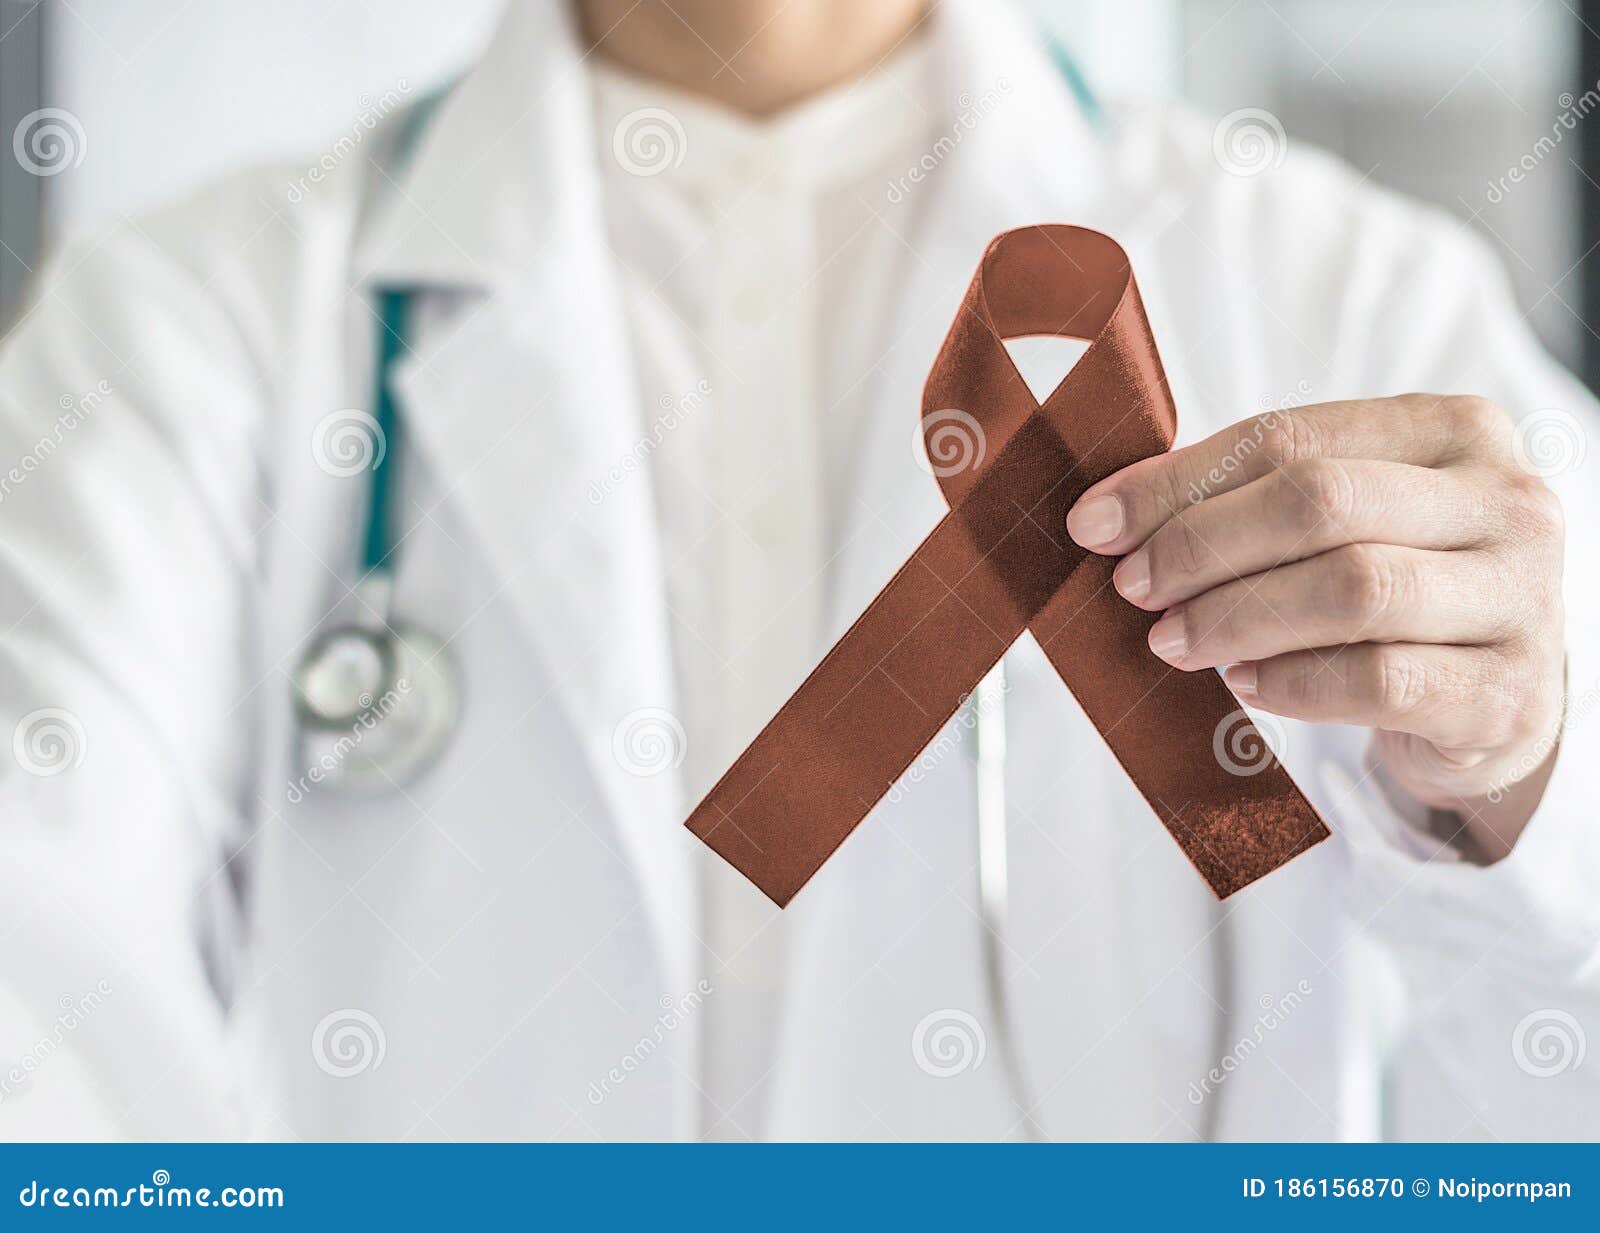 copper brown awareness ribbon on doctorÃ¢â¬â¢s hand, ic color for anti-tobacco, colon colorectal cancers, herpes simplex virus